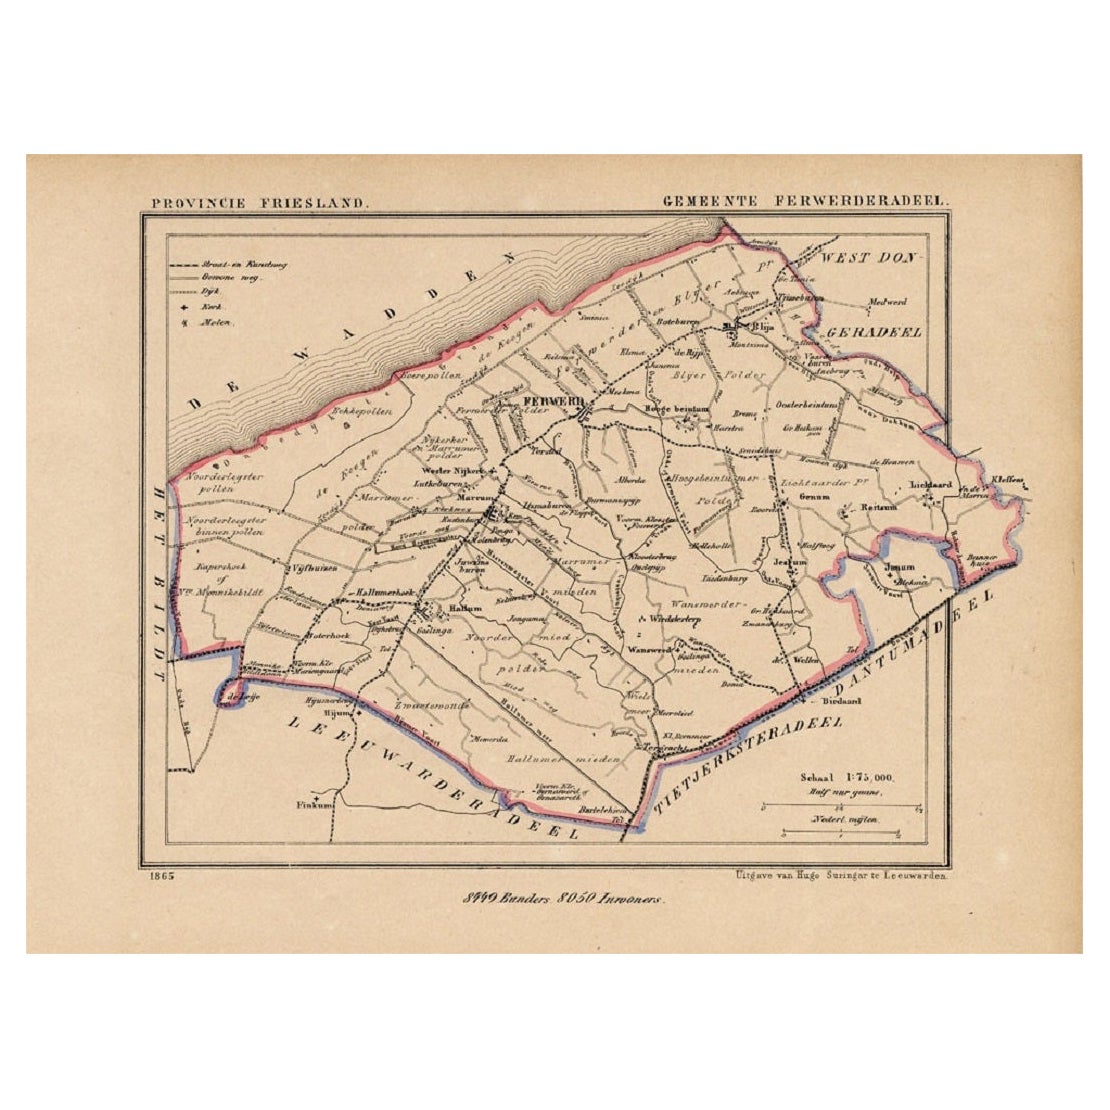 Antique Map of the County Ferwerderadeel, Friesland, The Netherlands, 1868